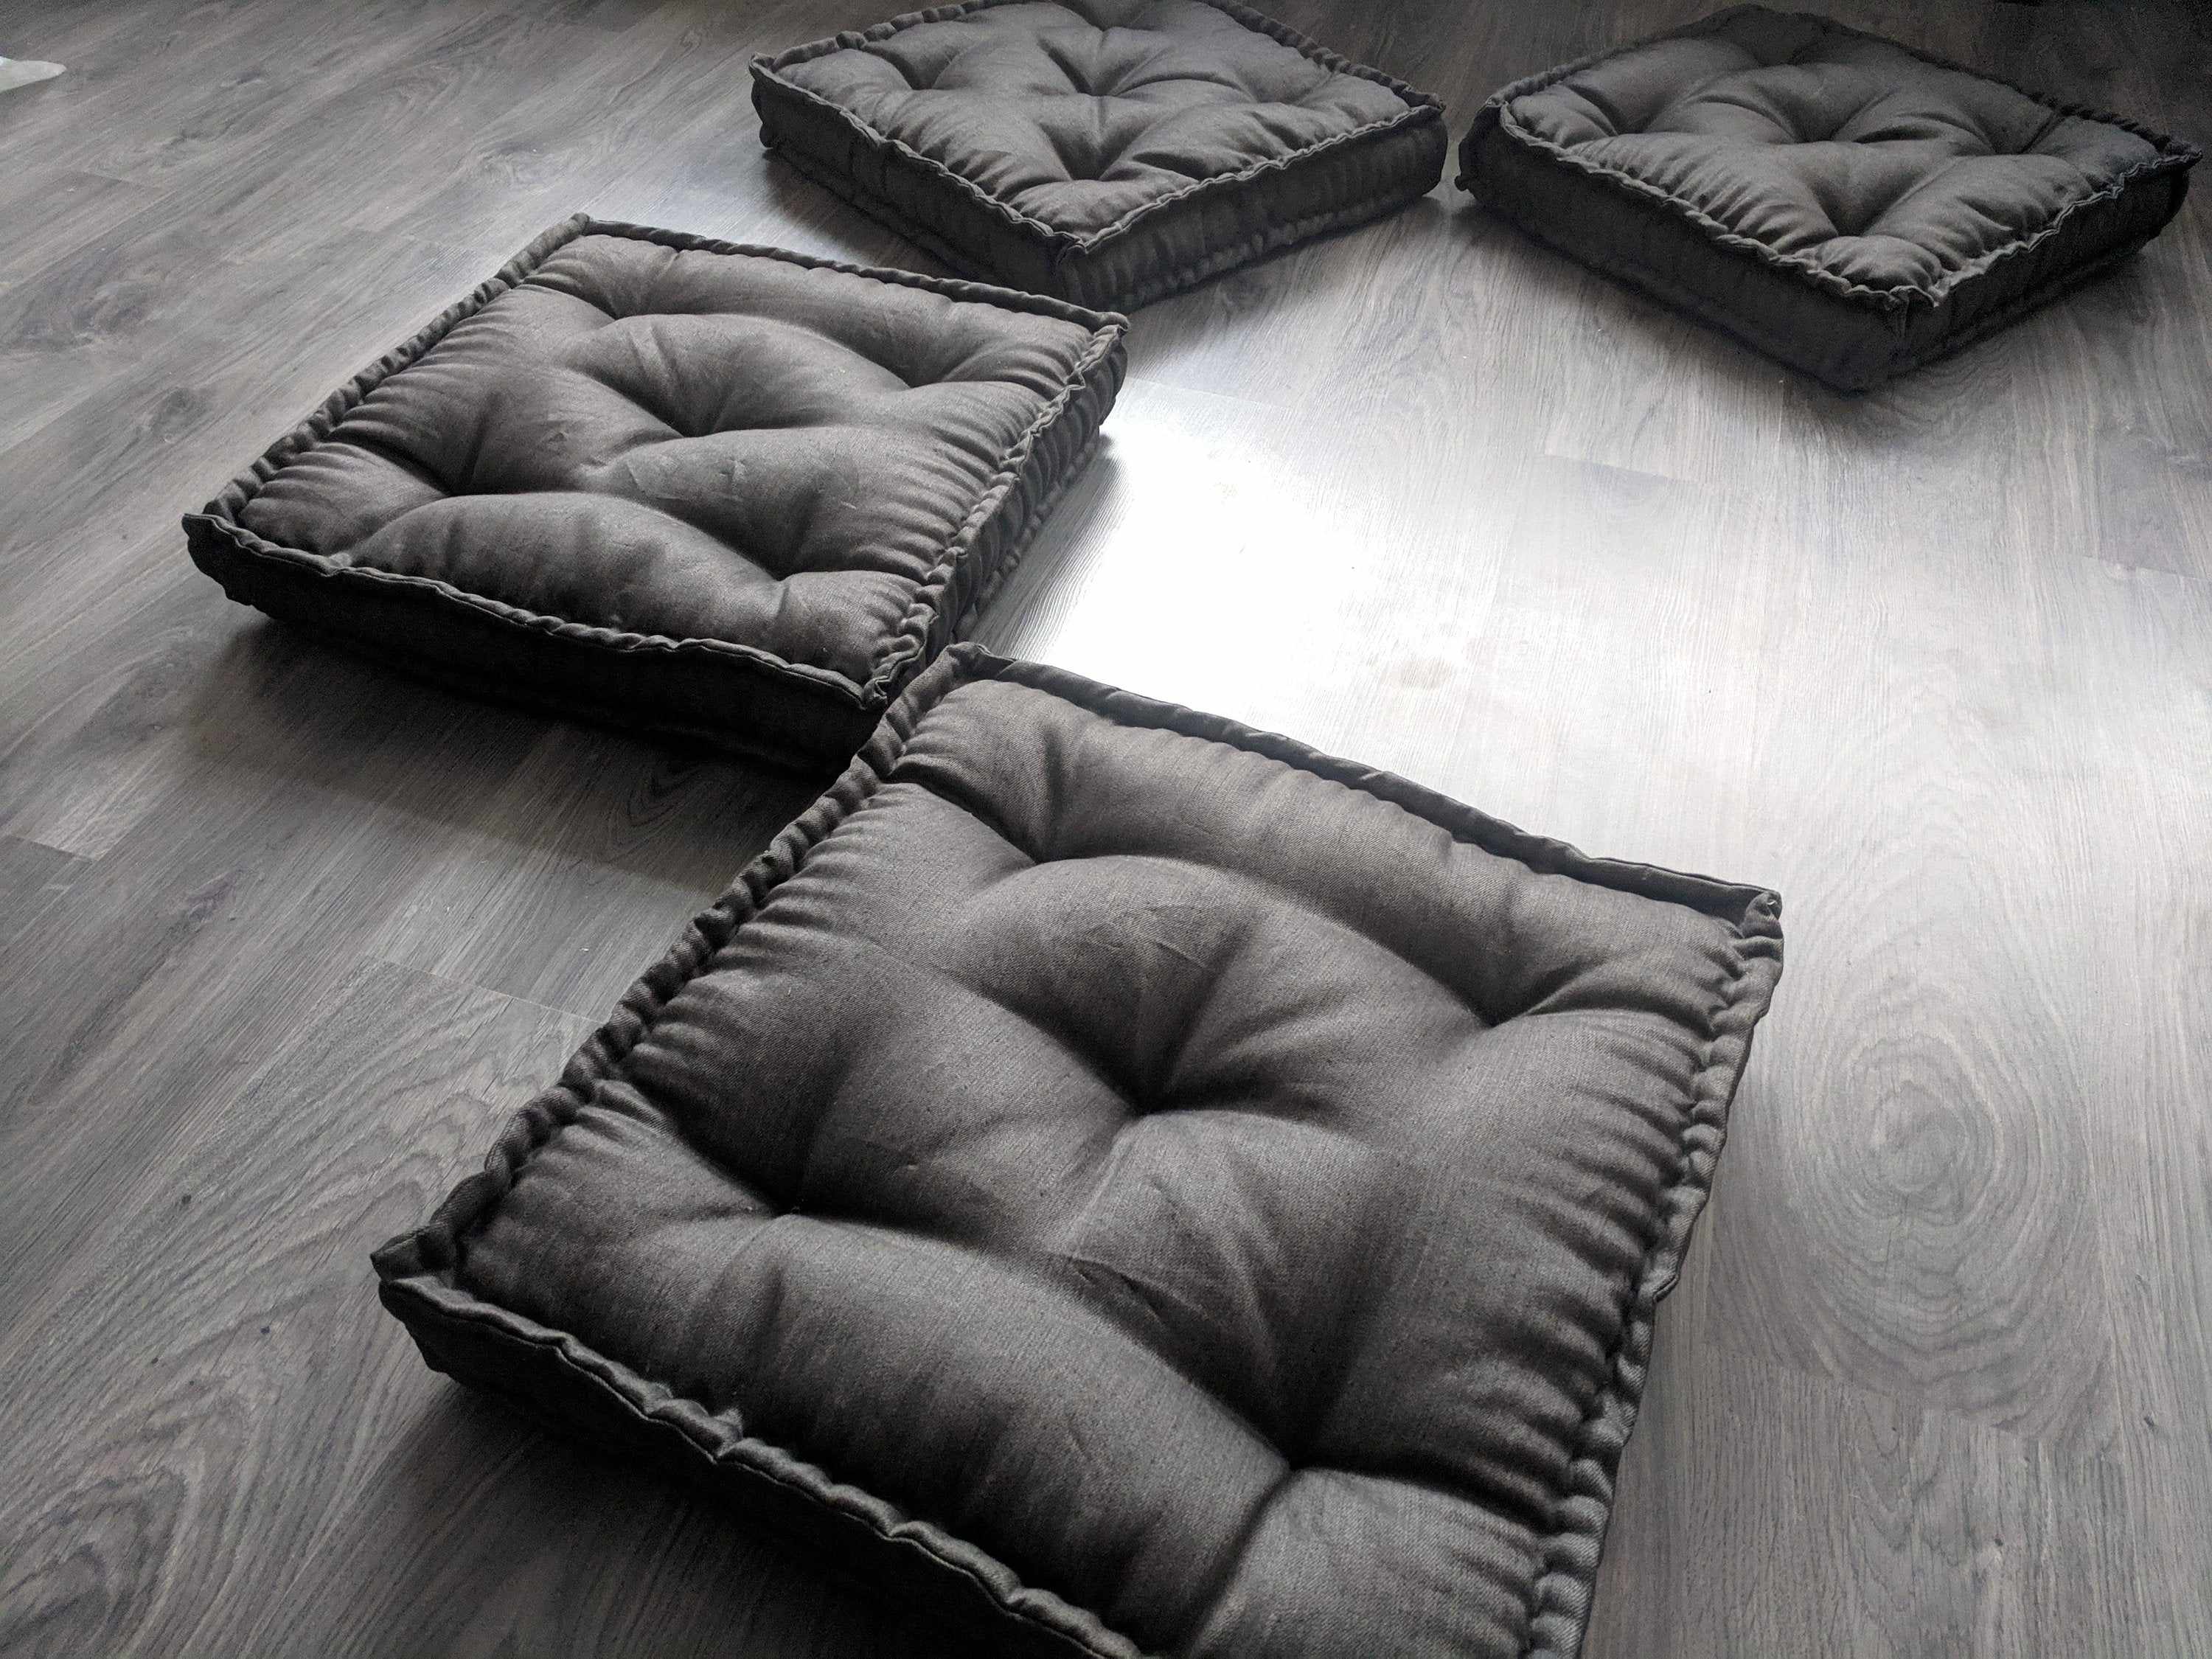 Dark grey Hemp Floor cushion with organic hemp fiber filling in linen –  HempOrganicLife